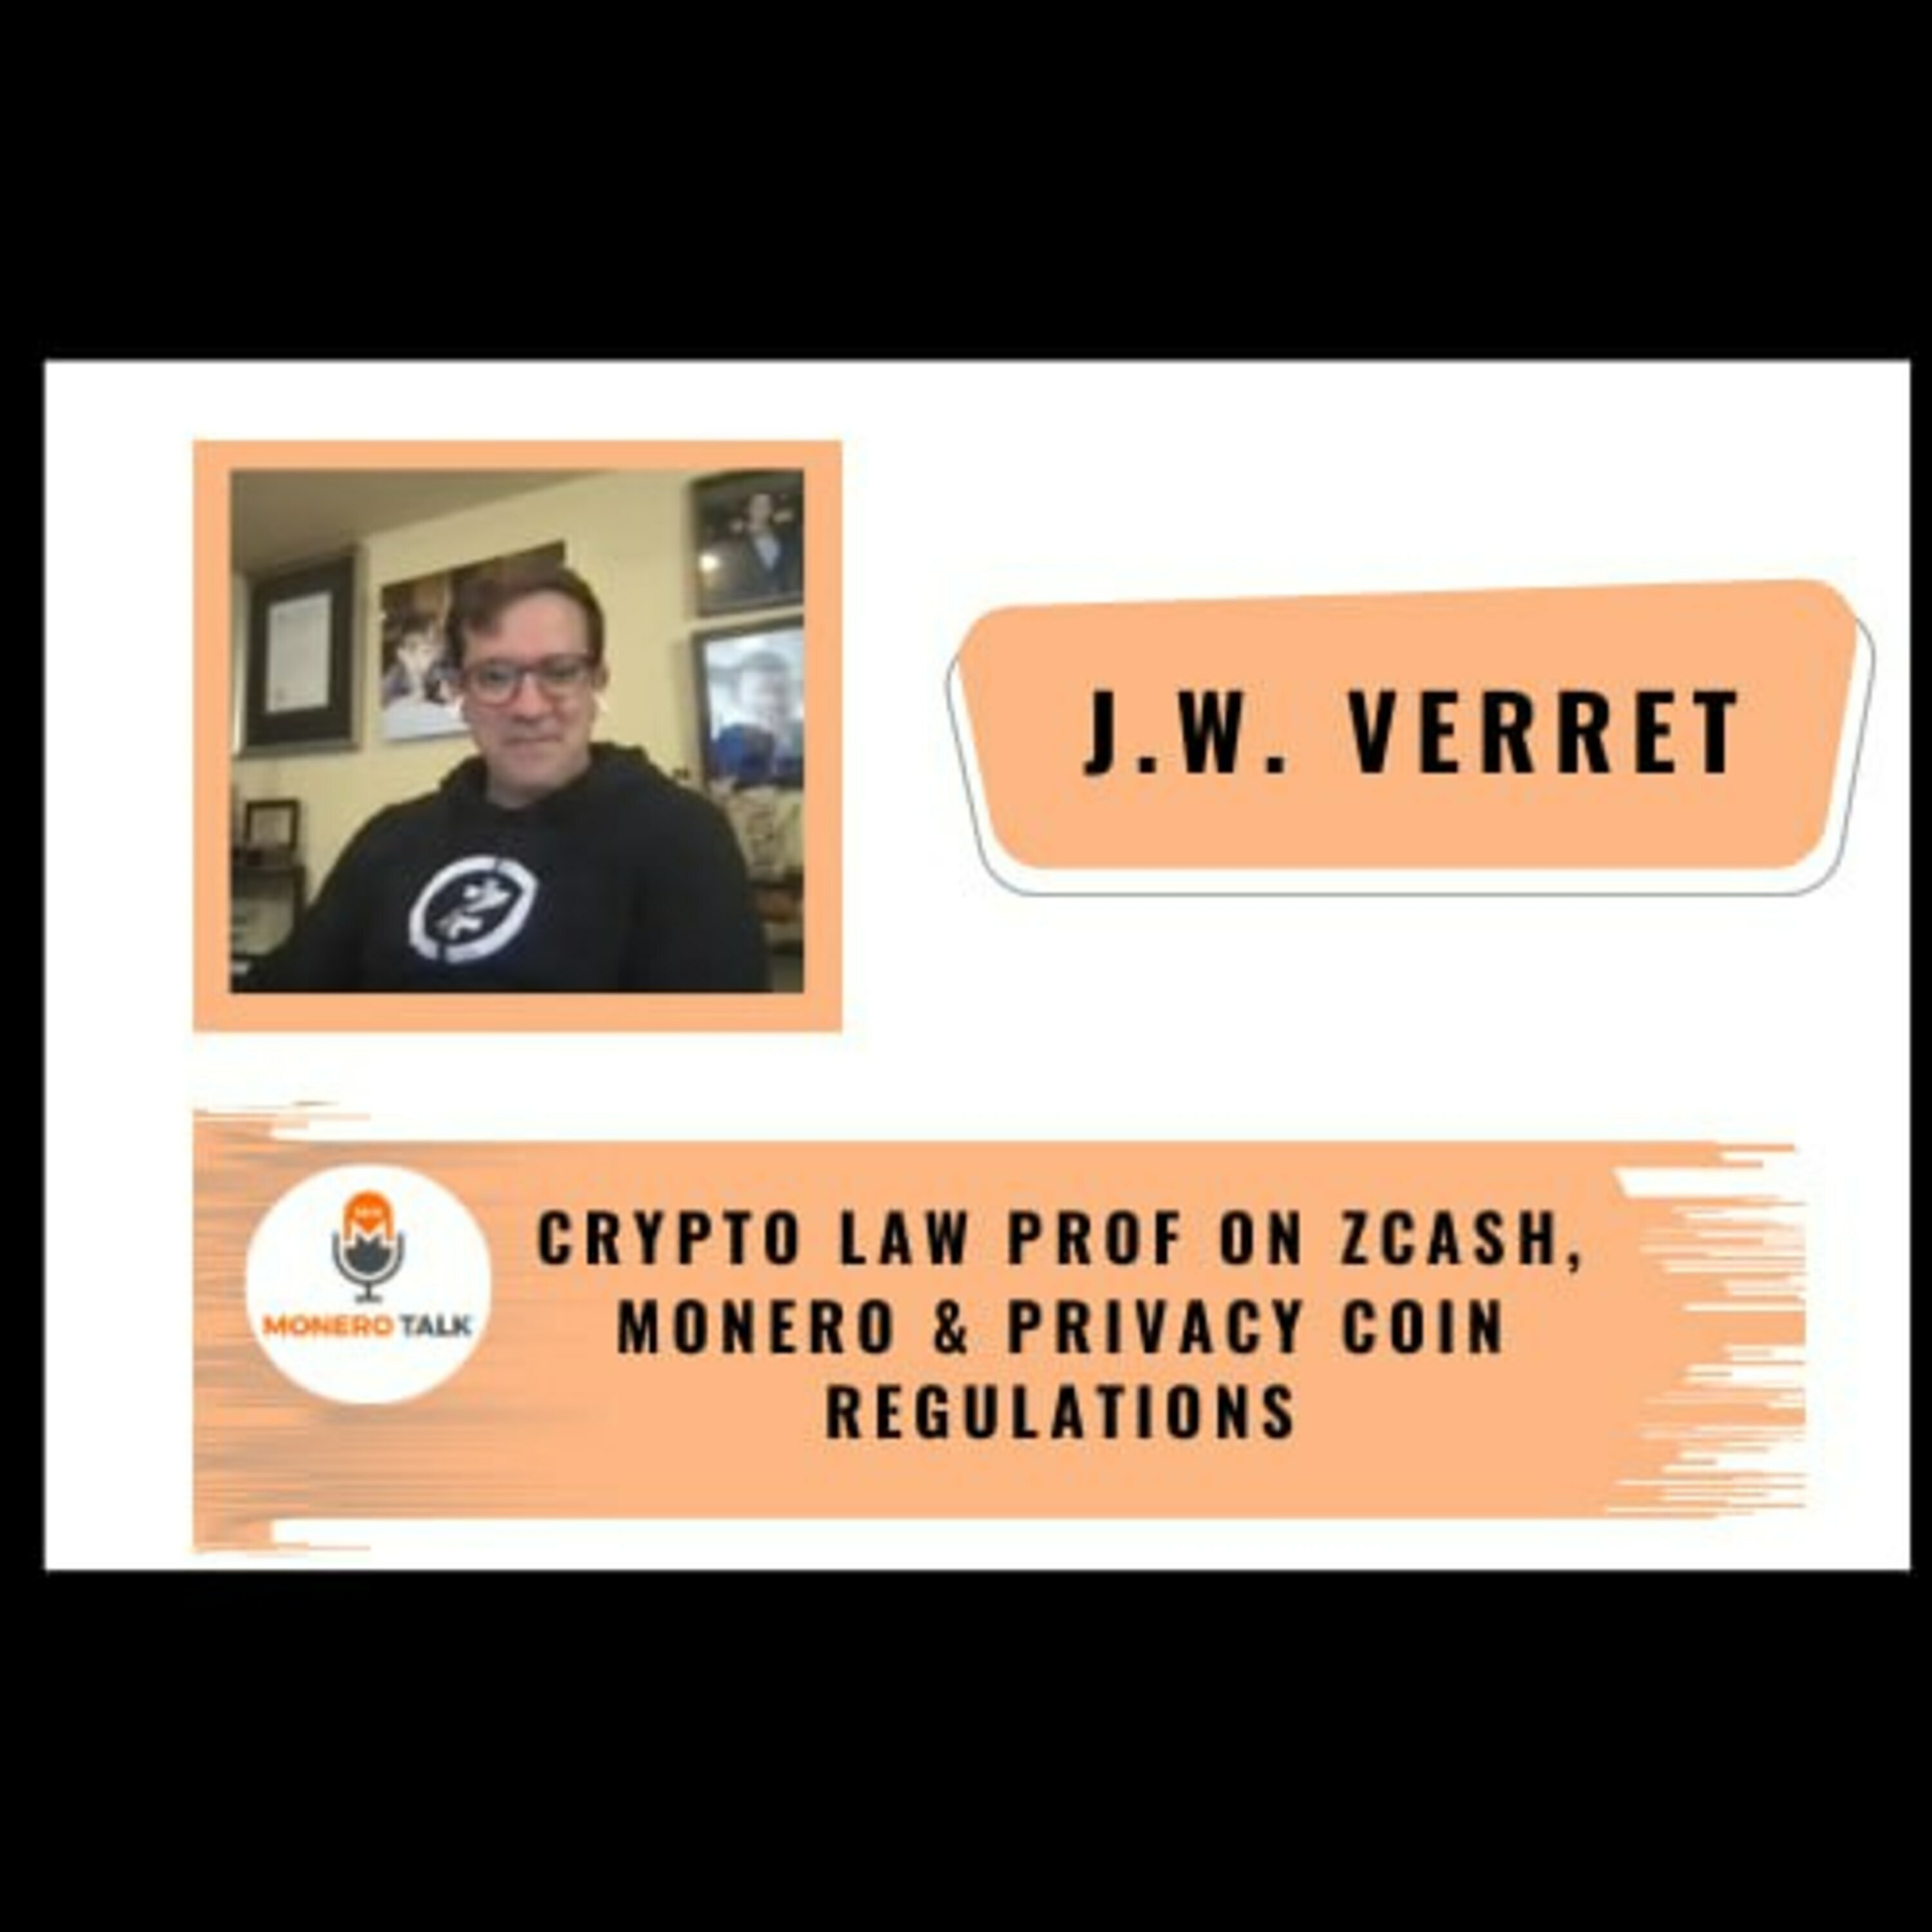 J.W. Verret on Zcash, Monero & Privacy Coin Regulations